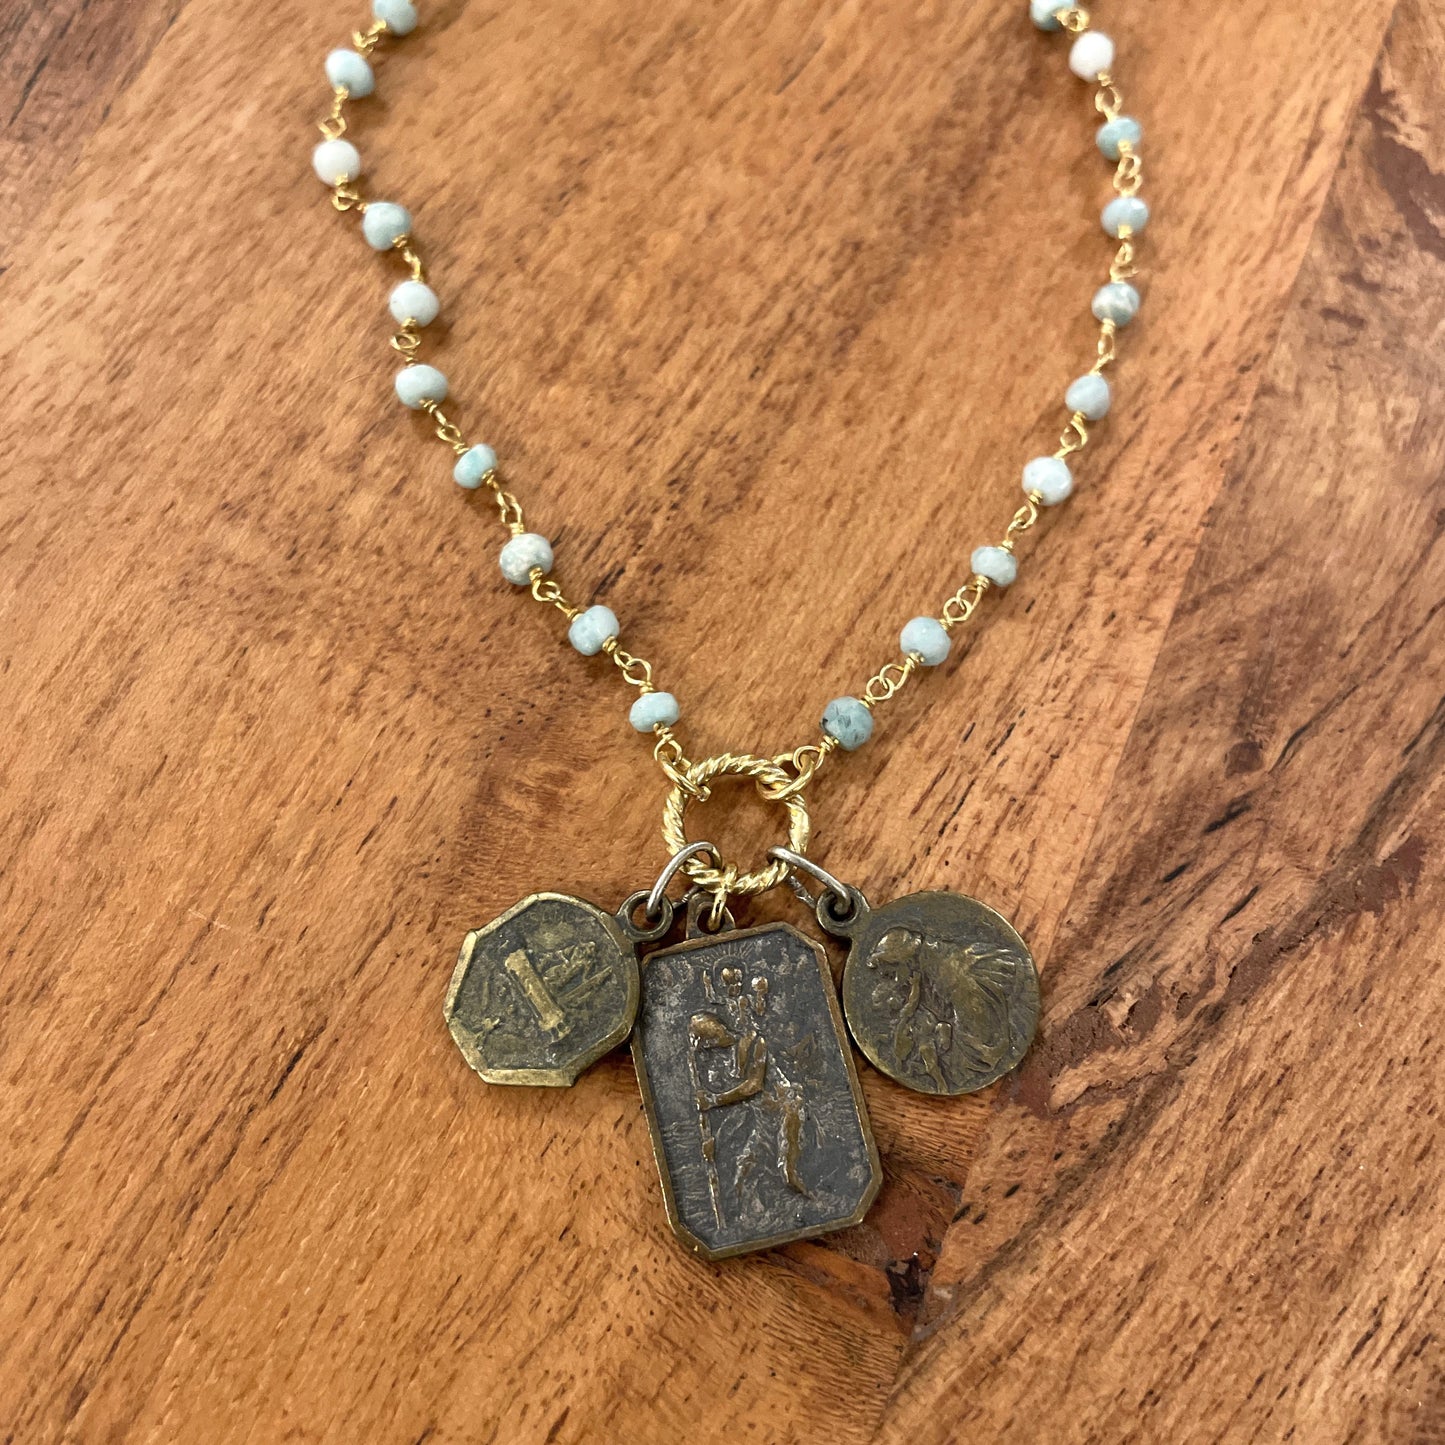 Chrysophrase Vintage Charm Necklace